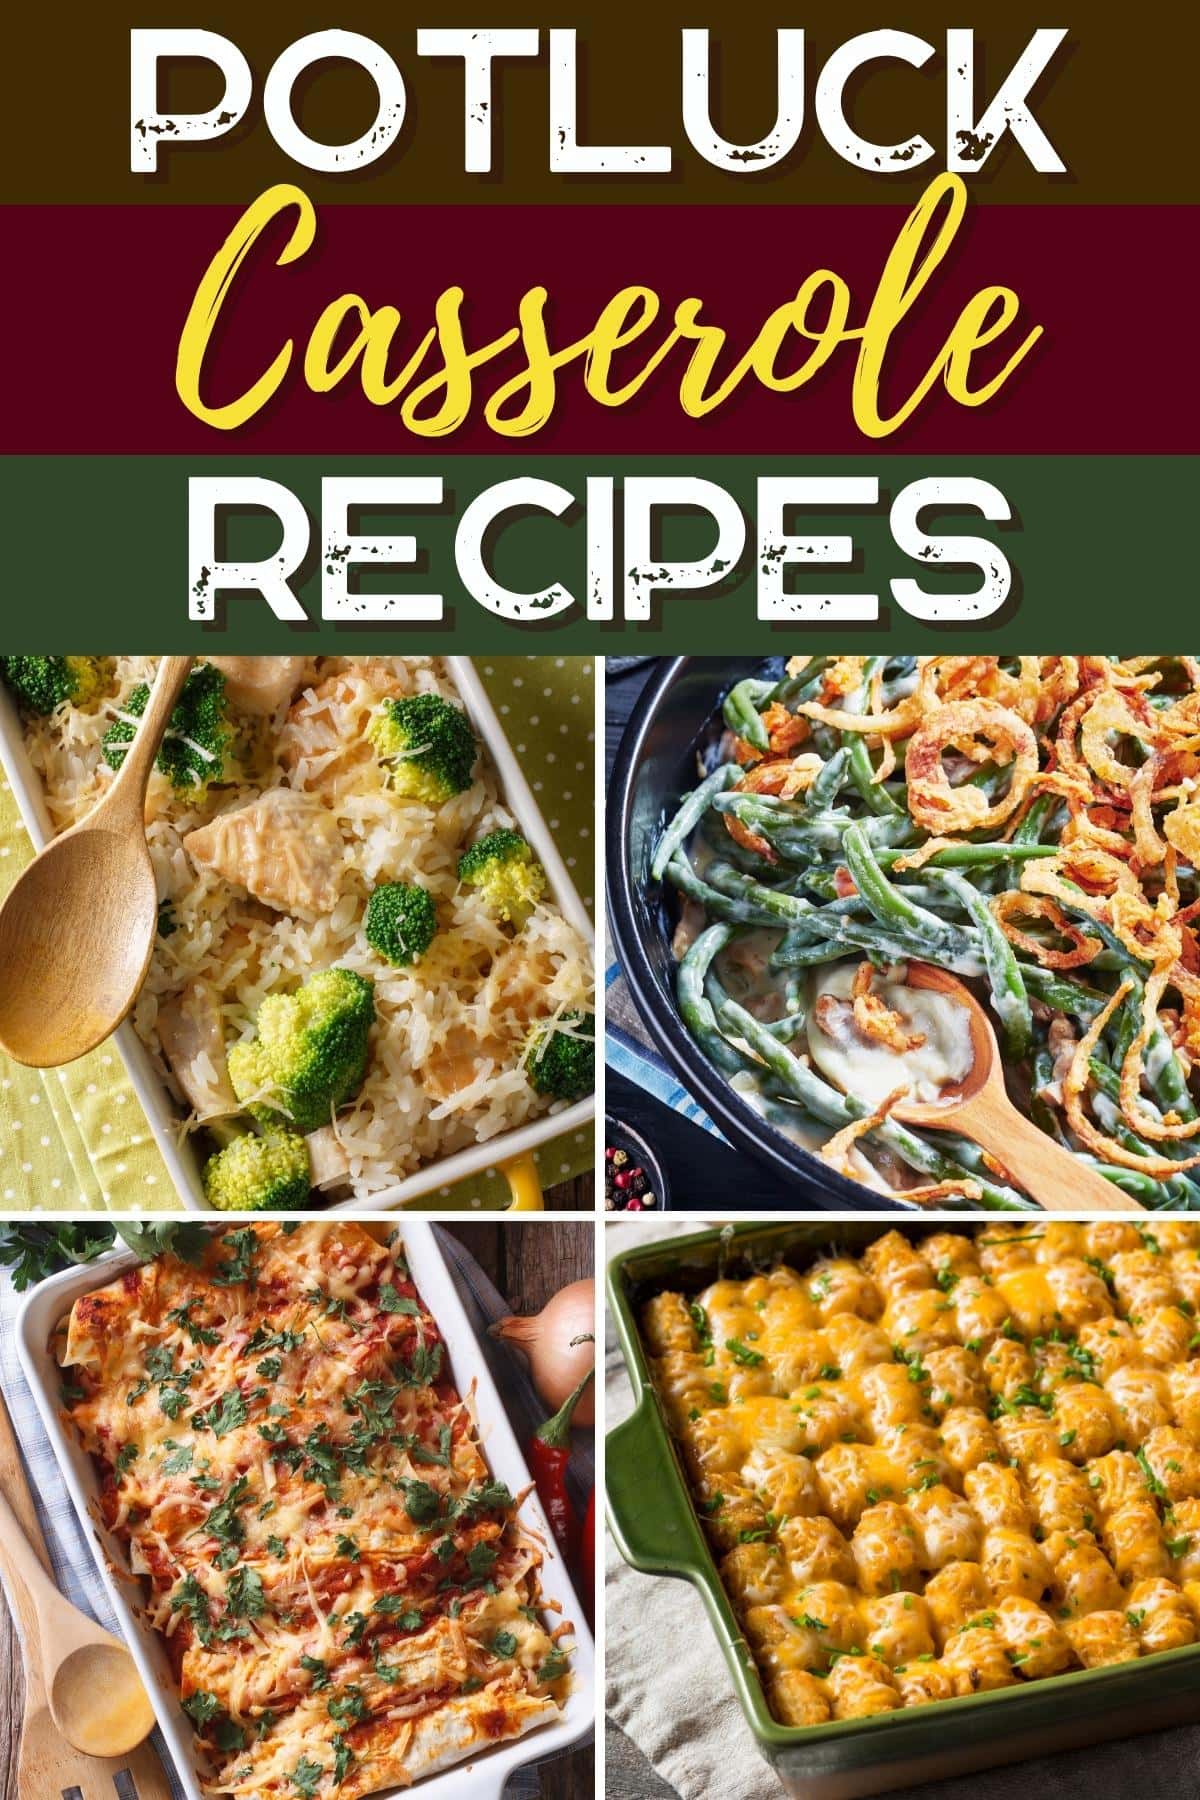 Potluck Casserole Recipes